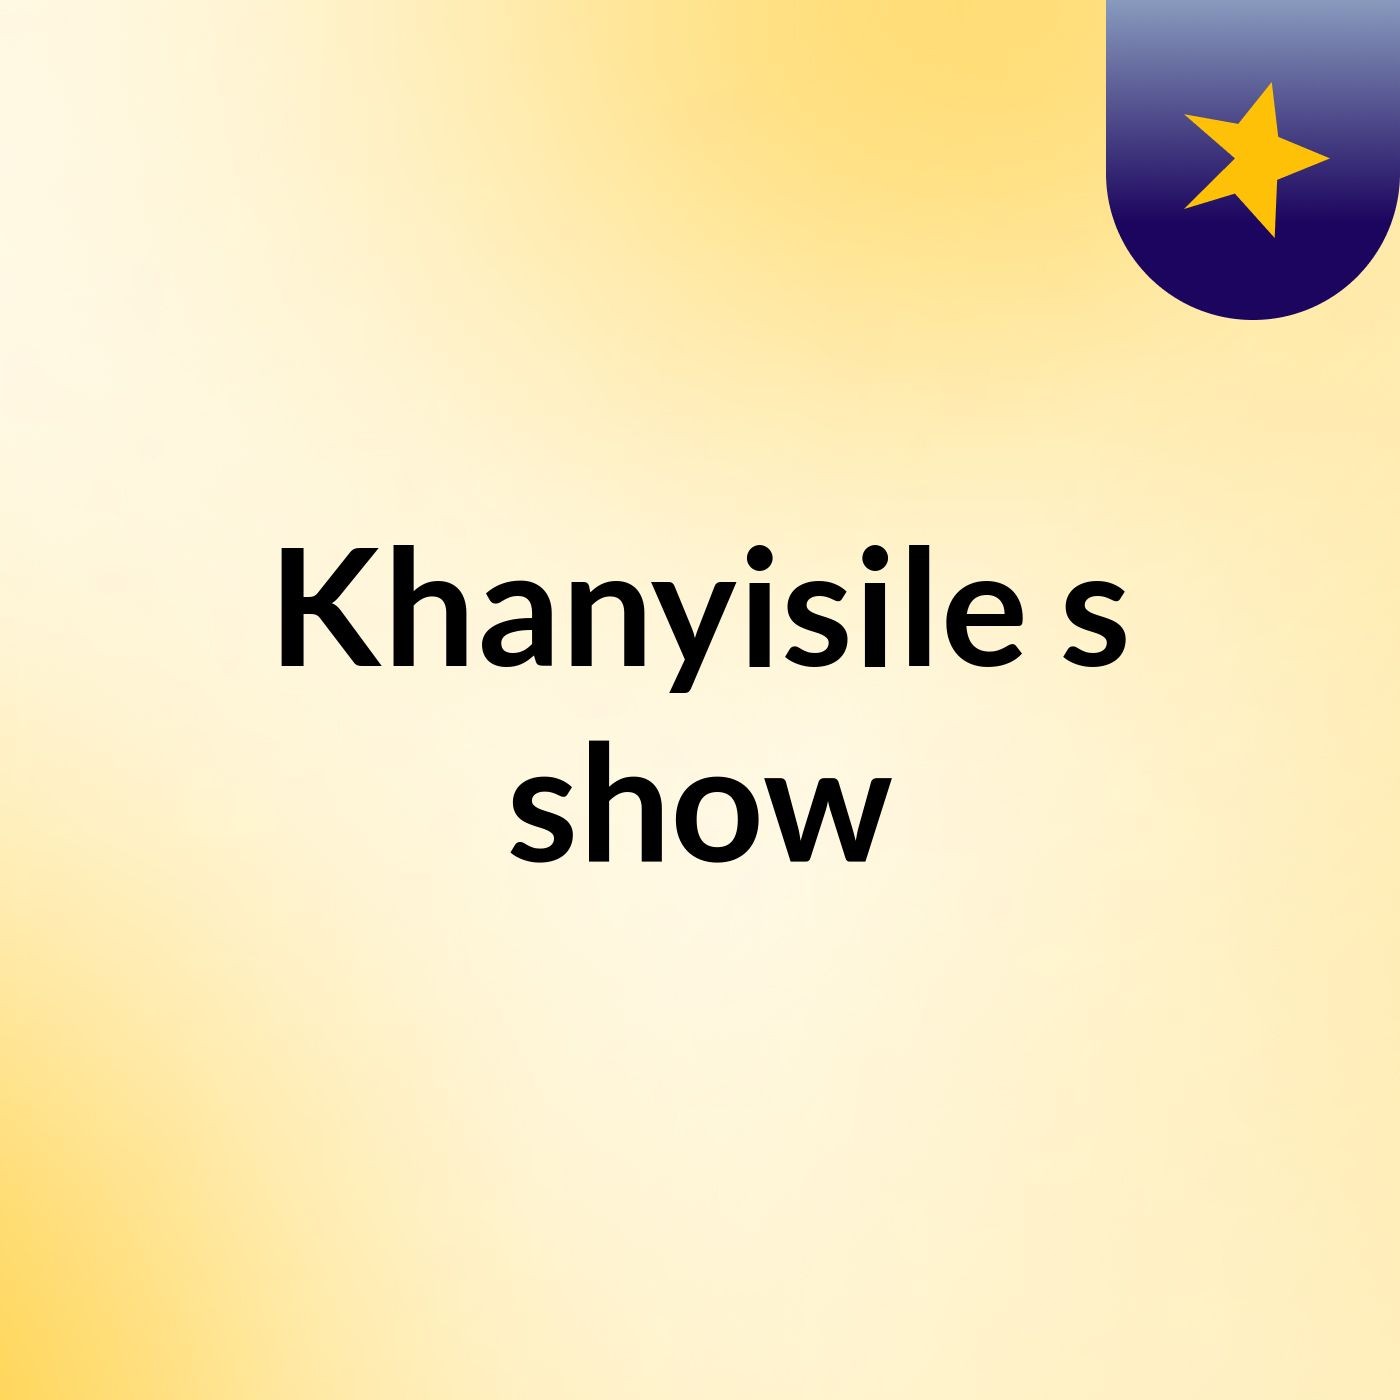 Khanyisile's show